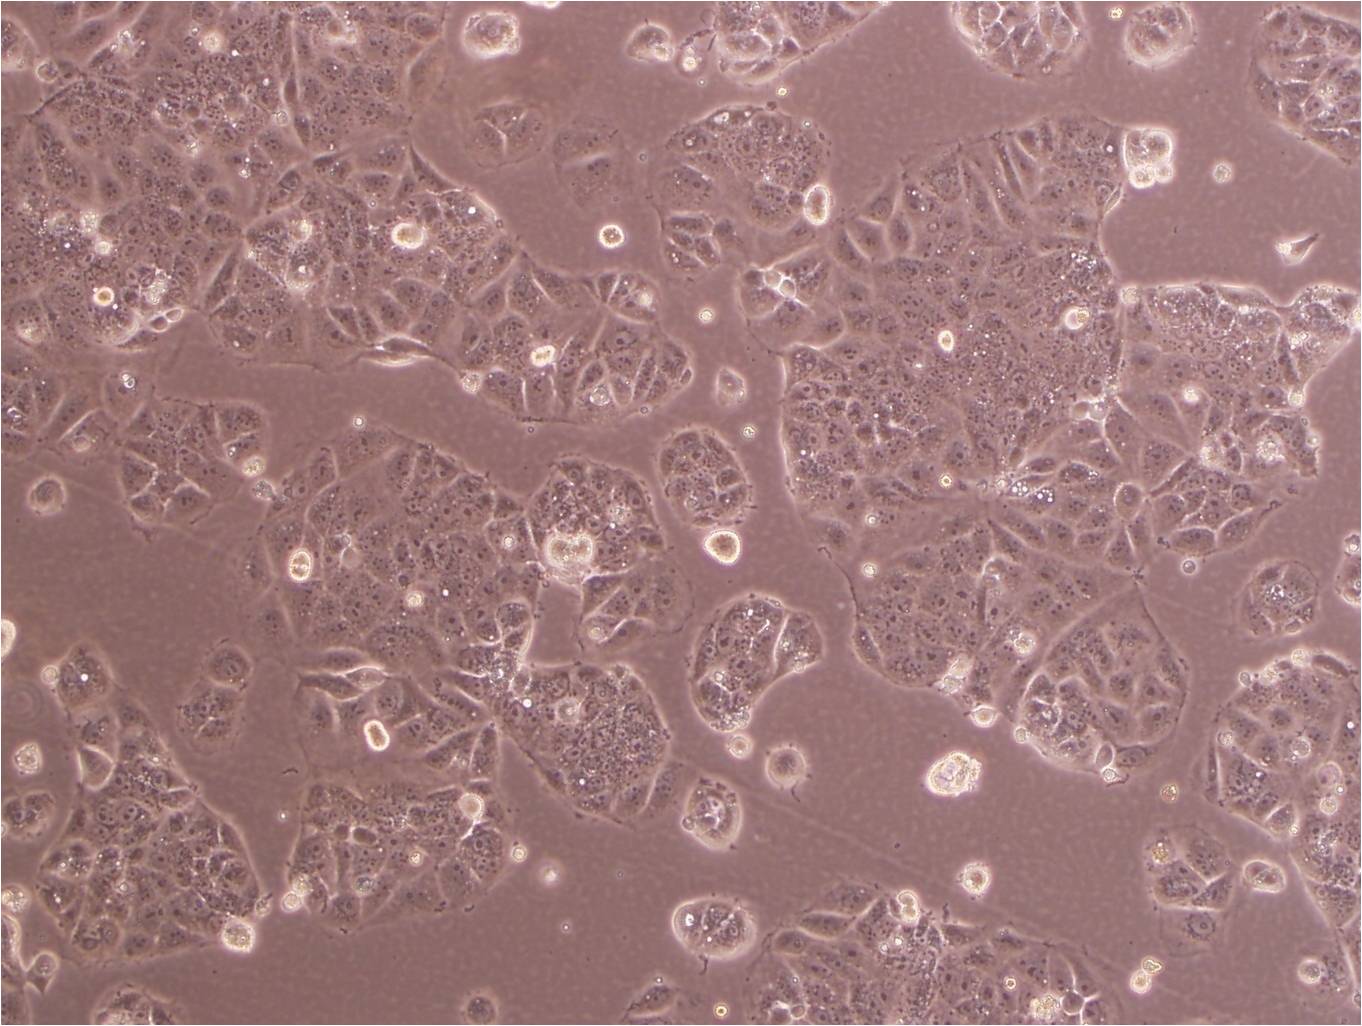 RA-FLSs fibroblast cells类风湿关节炎成纤维样滑膜细胞系,RA-FLSs fibroblast cells